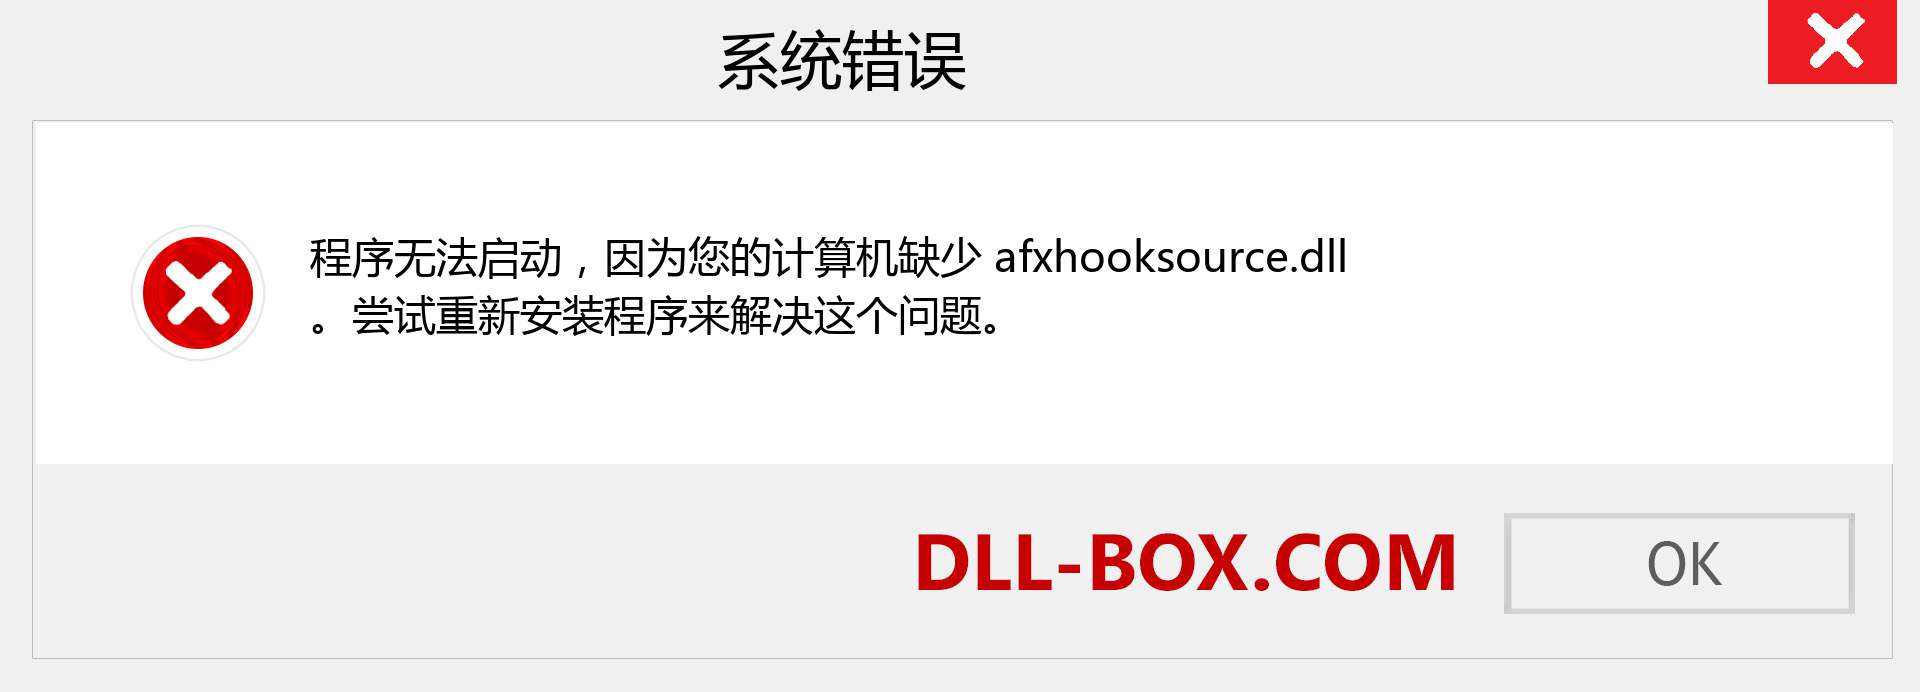 afxhooksource.dll 文件丢失？。 适用于 Windows 7、8、10 的下载 - 修复 Windows、照片、图像上的 afxhooksource dll 丢失错误